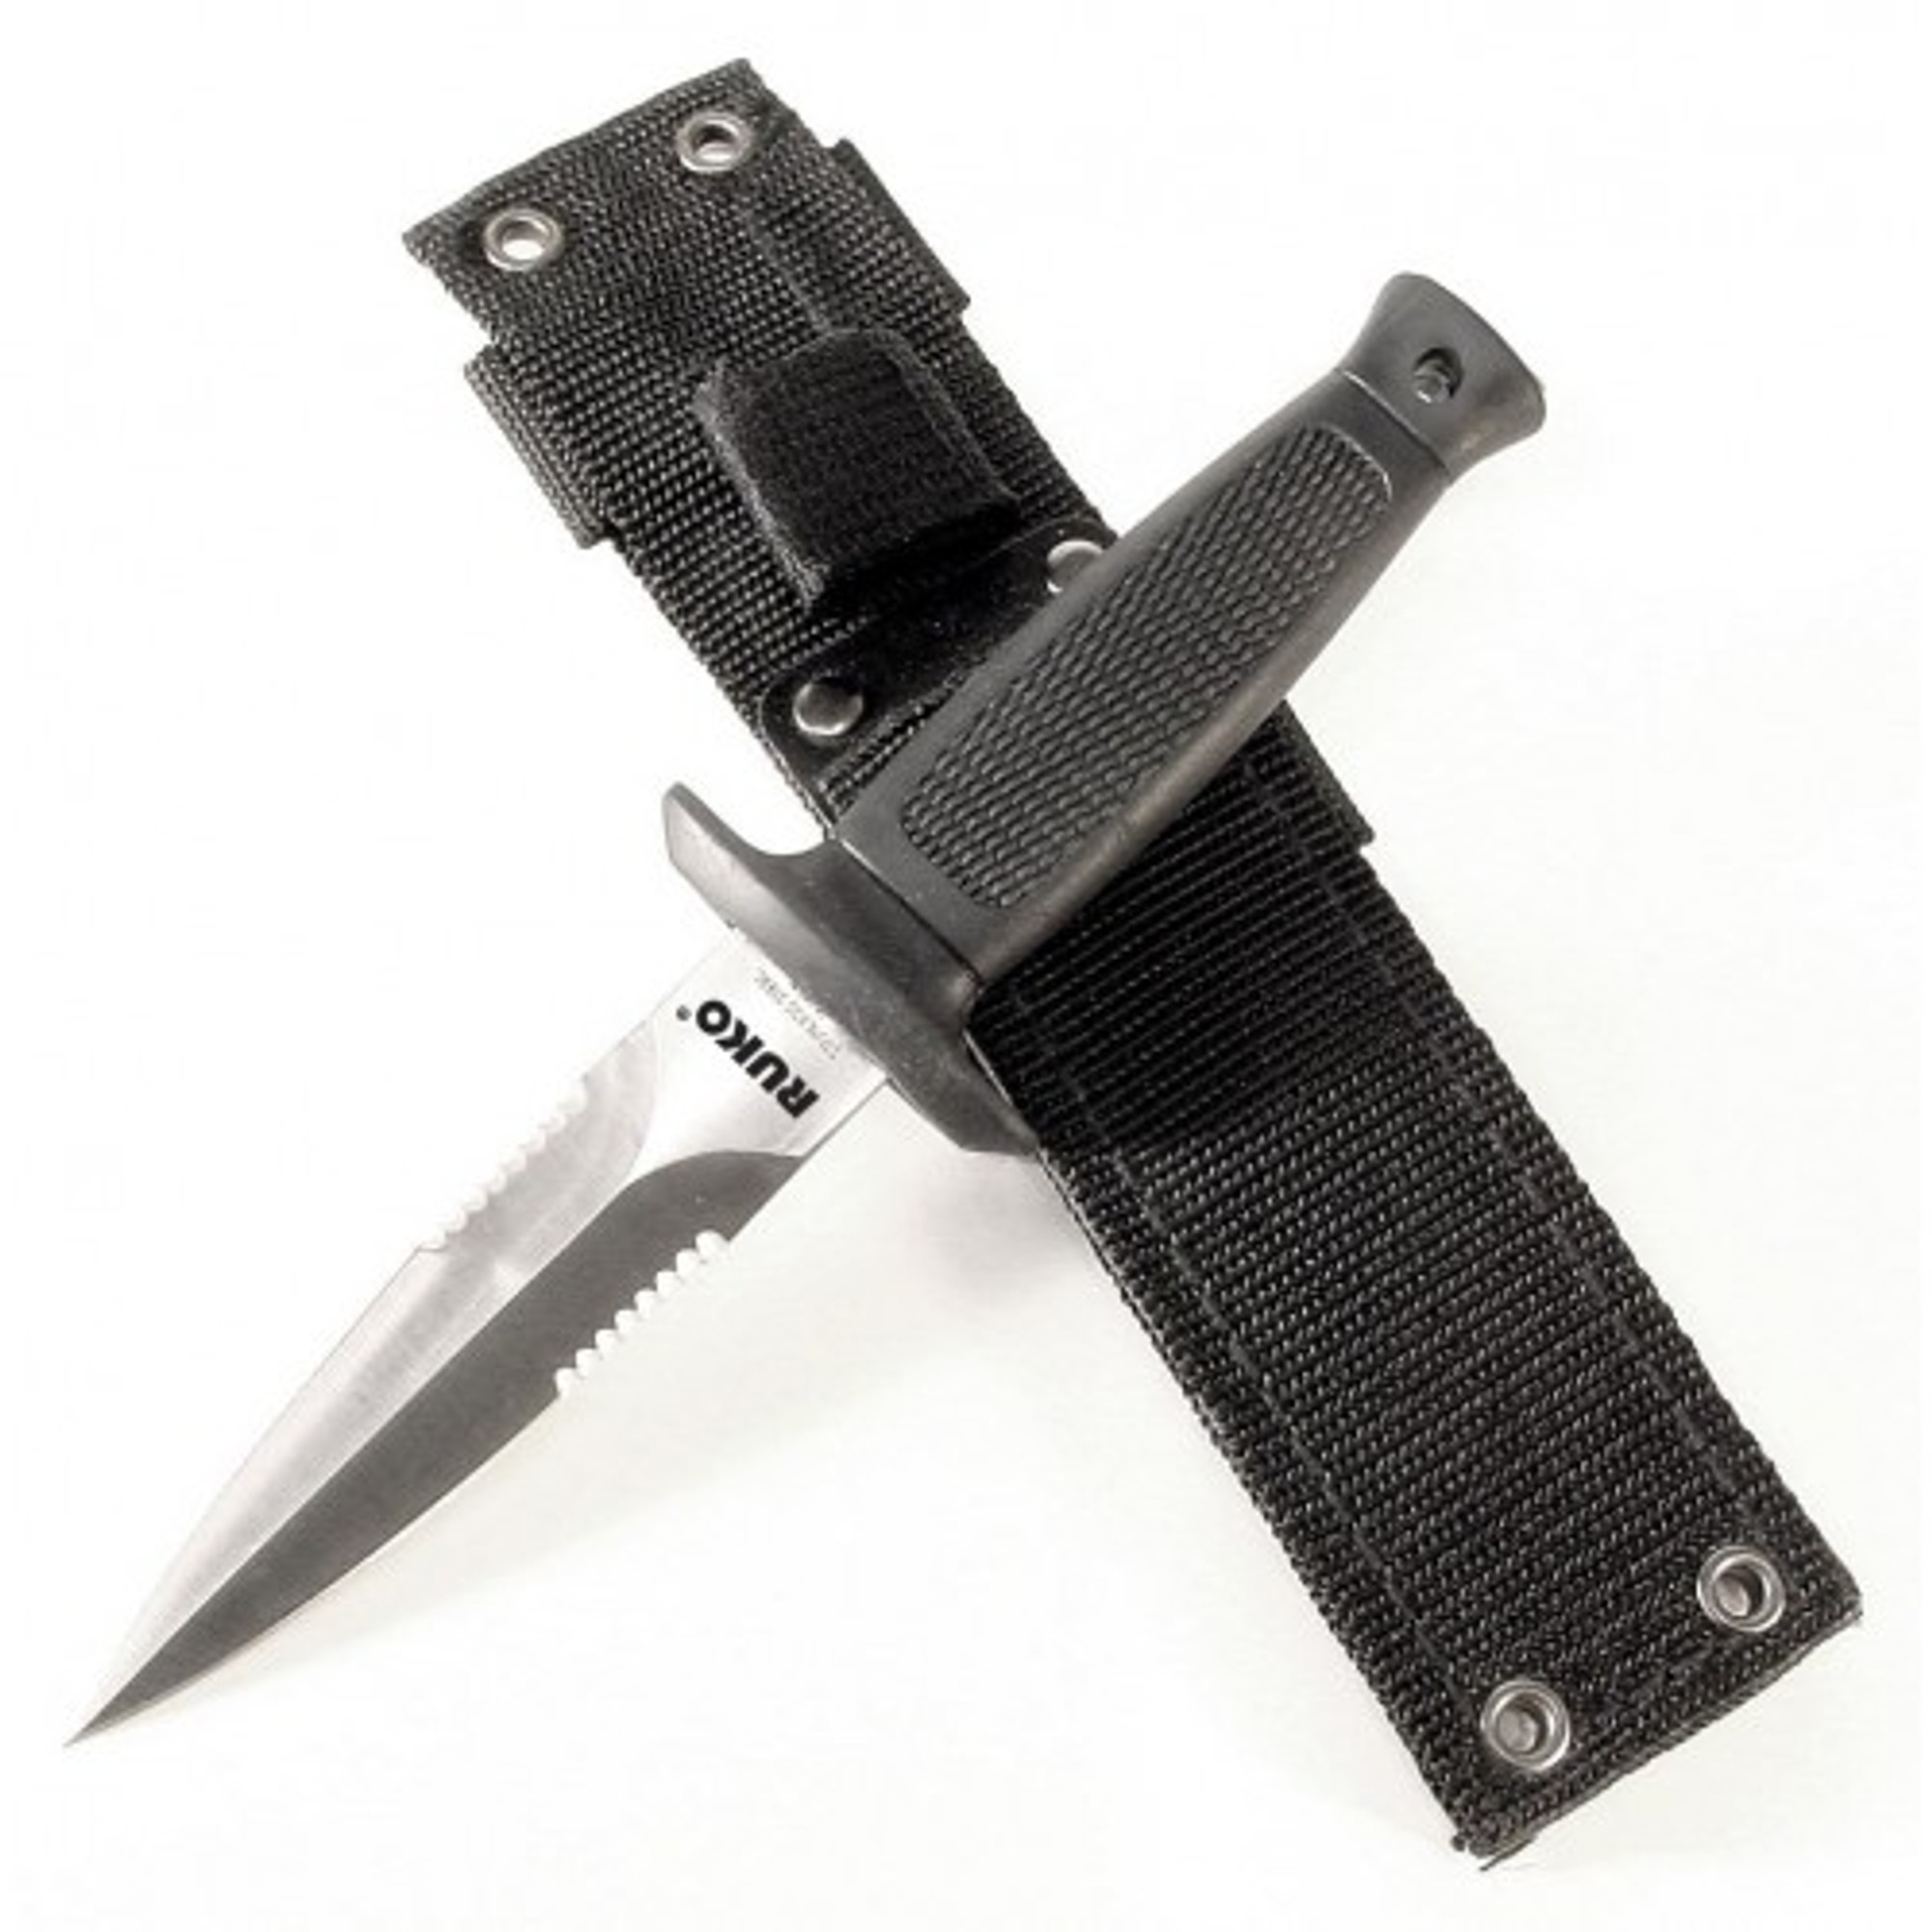 RUKO G-013, 420J2, 4-1/2" Fixed Blade Boot Knife, Non-Slip Textured Rubber Handle